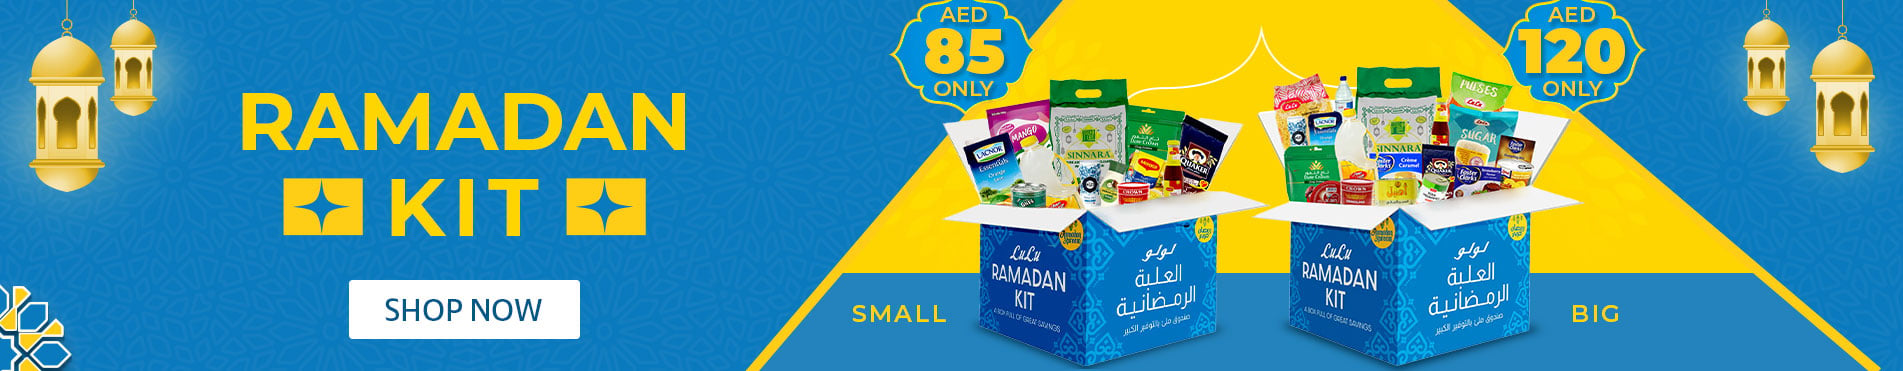 Ramadan kits